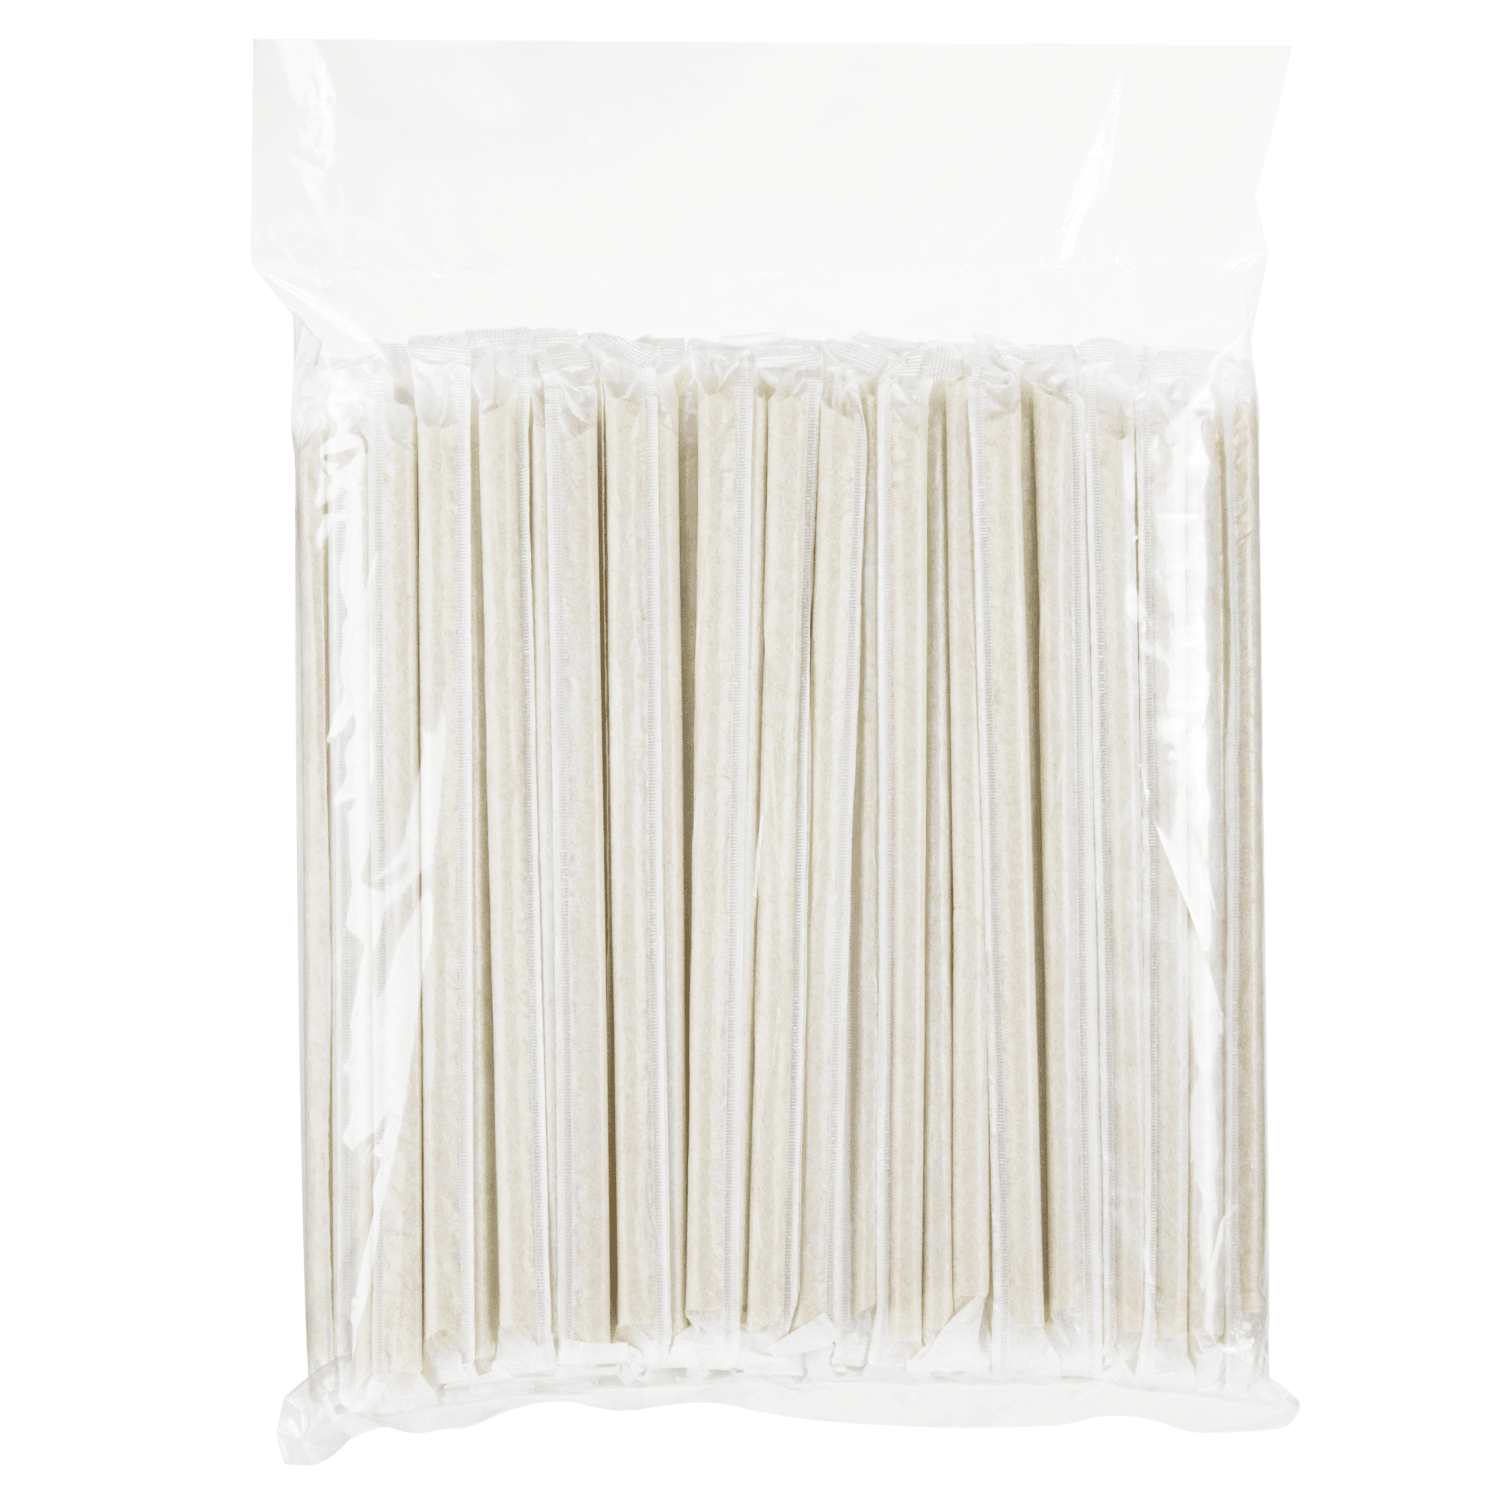 Karat Earth Diagonal Cut Bamboo Fiber Giant 9" Straws in packaging